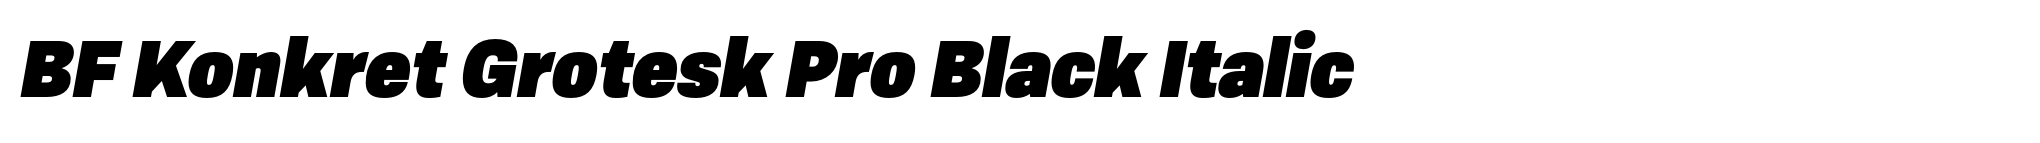 BF Konkret Grotesk Pro Black Italic image